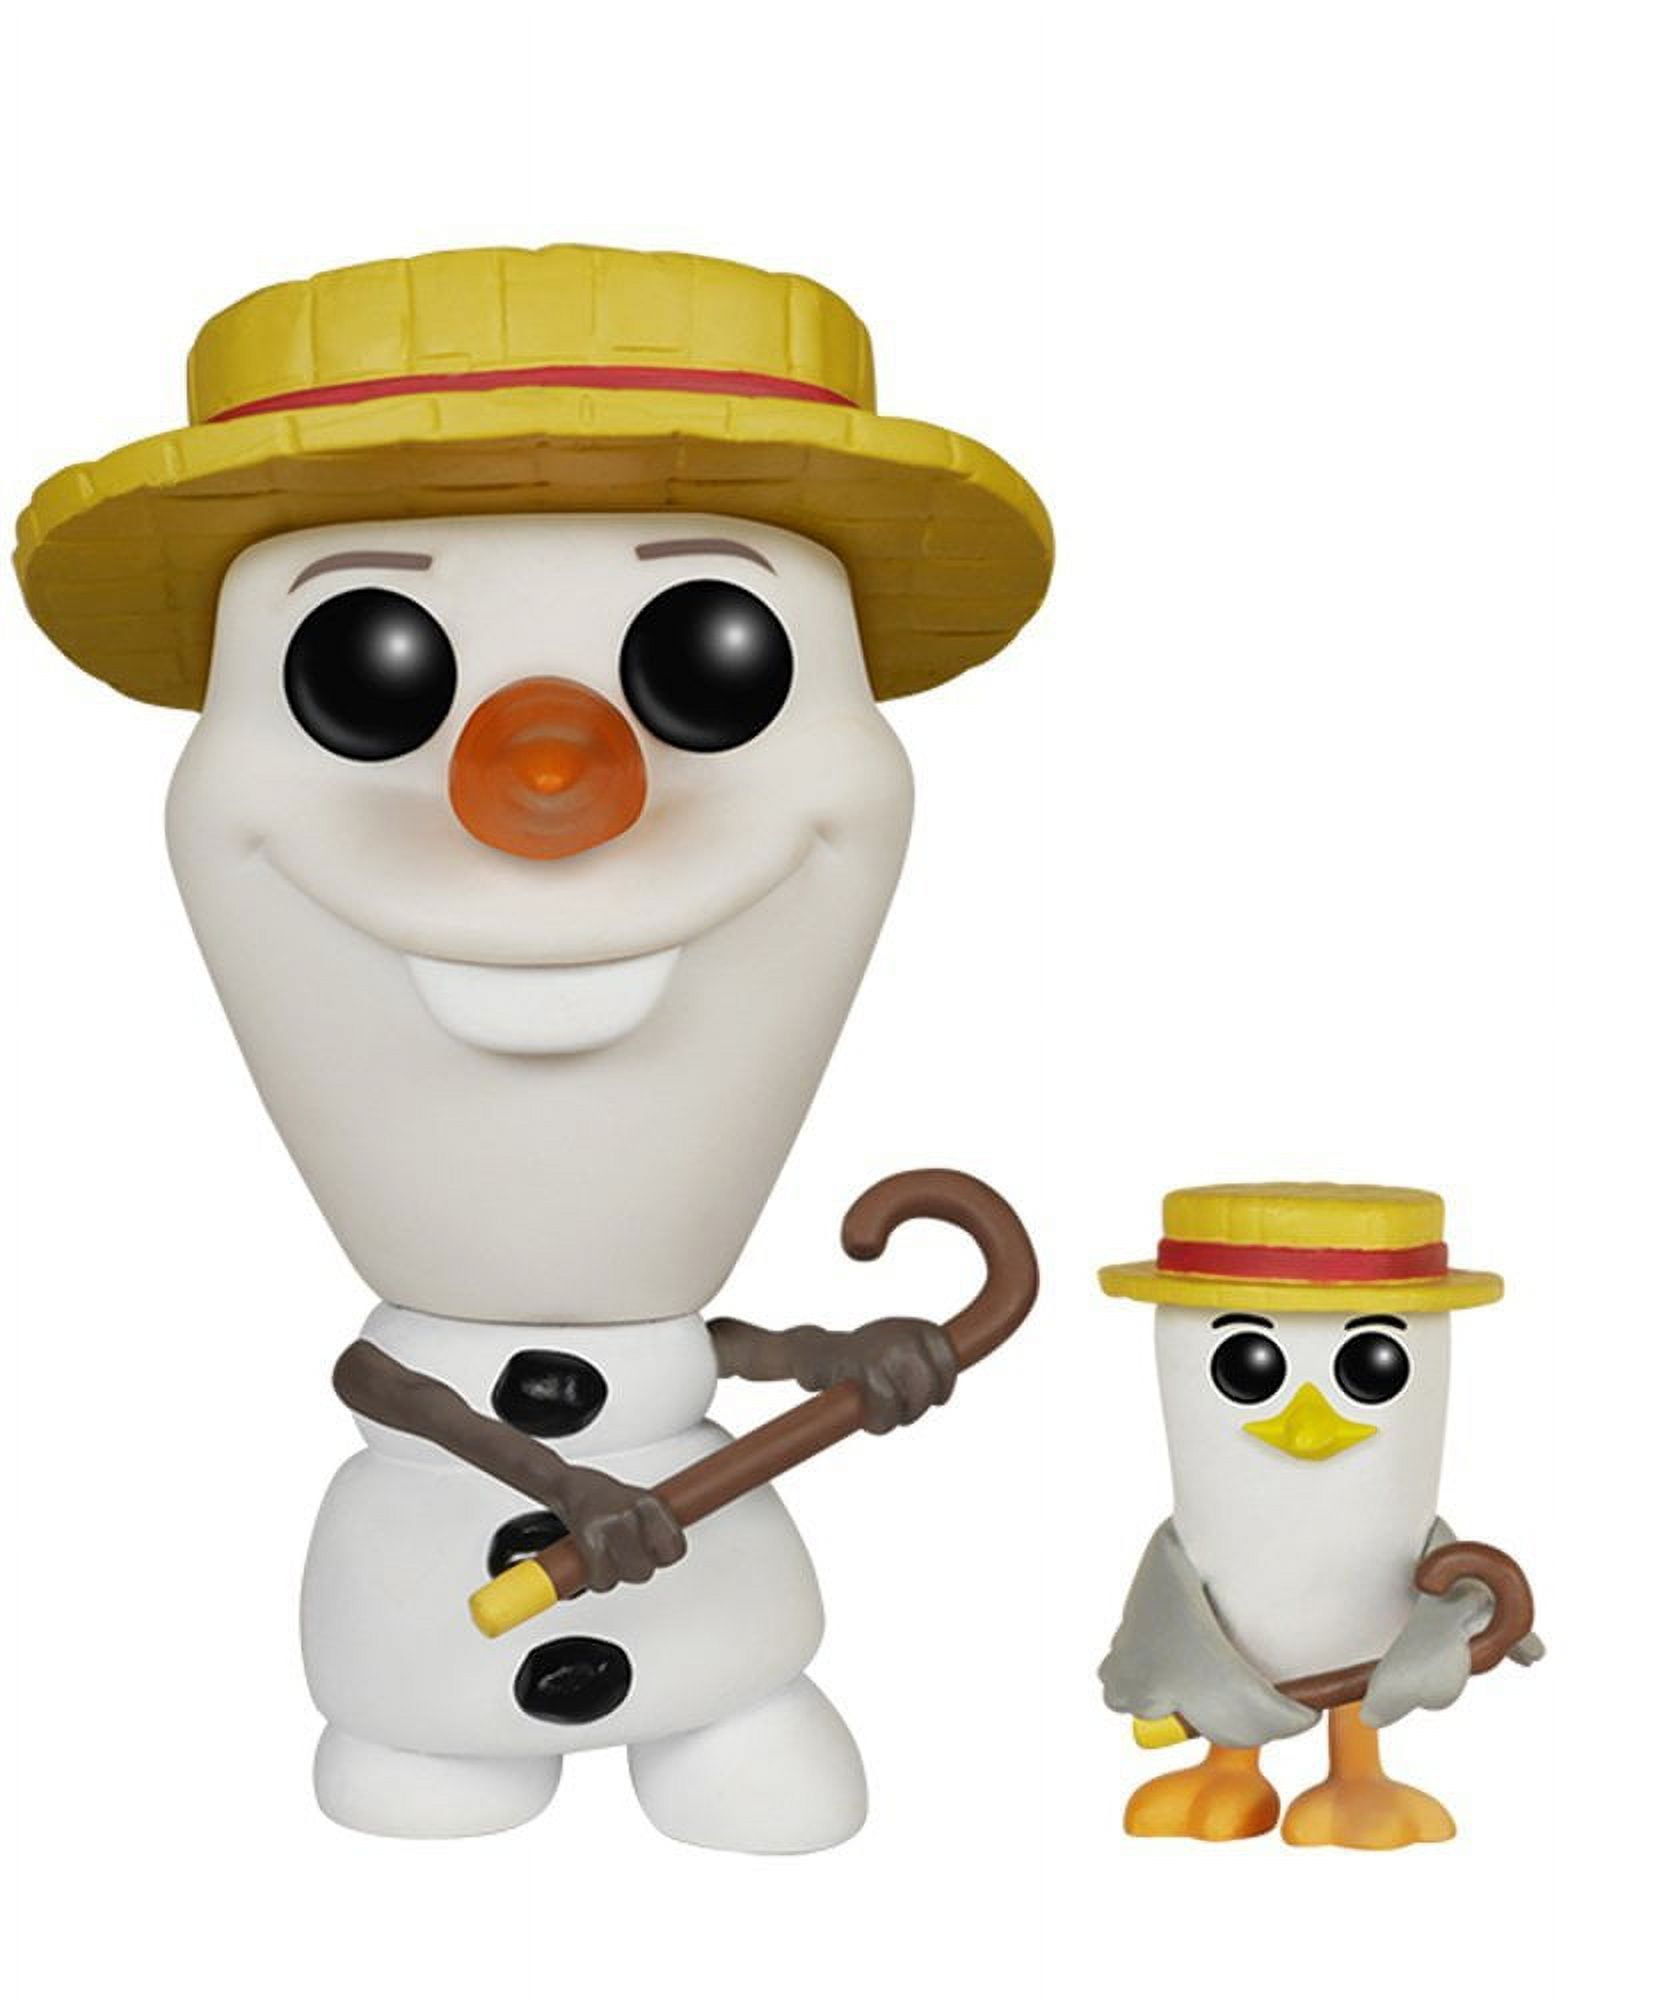 Funko Pop Disney: Frozen - Olaf 2015 SDCC Exclusive Vinyl Figure 